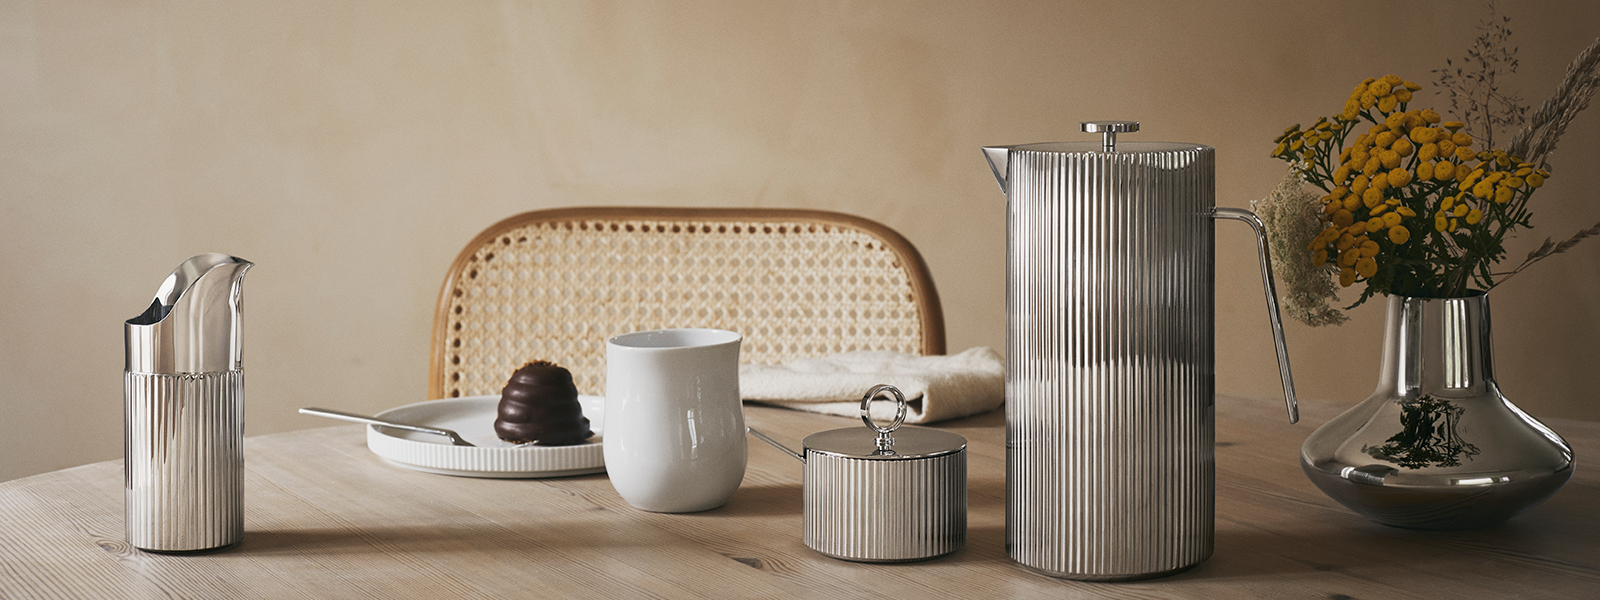 BERNADOTTE French Coffee Press - Design Inspired by Sigvard Bernadotte